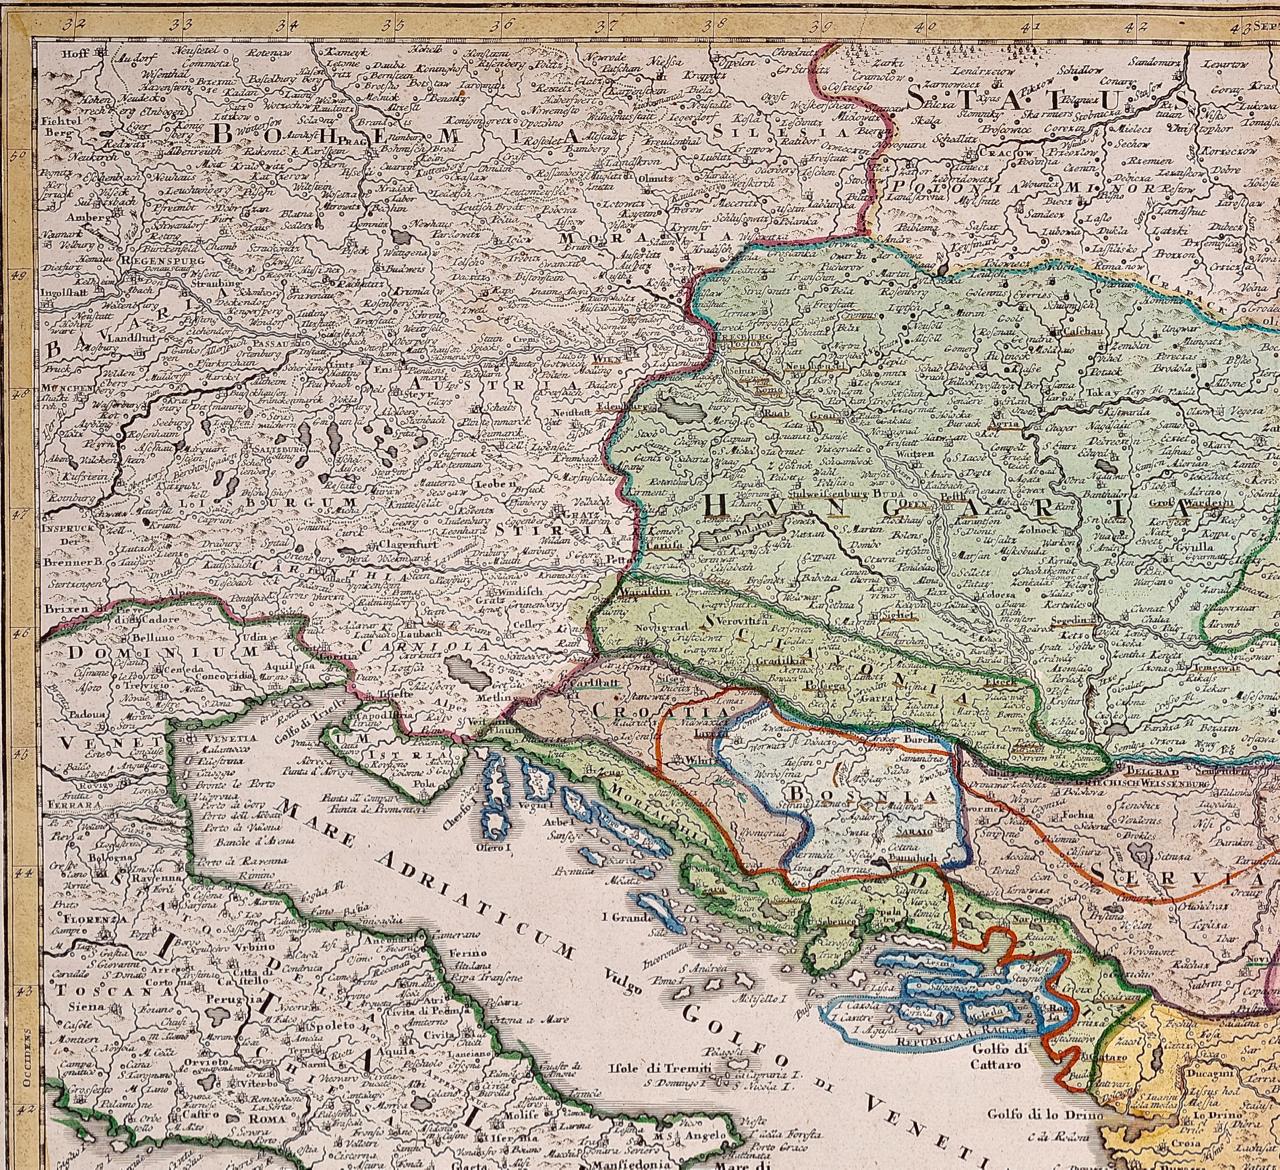 Danube River, Italy, Greece and Croatia: A Hand-colored 18th C. Homann Map  - Print by Johann Baptist Homann